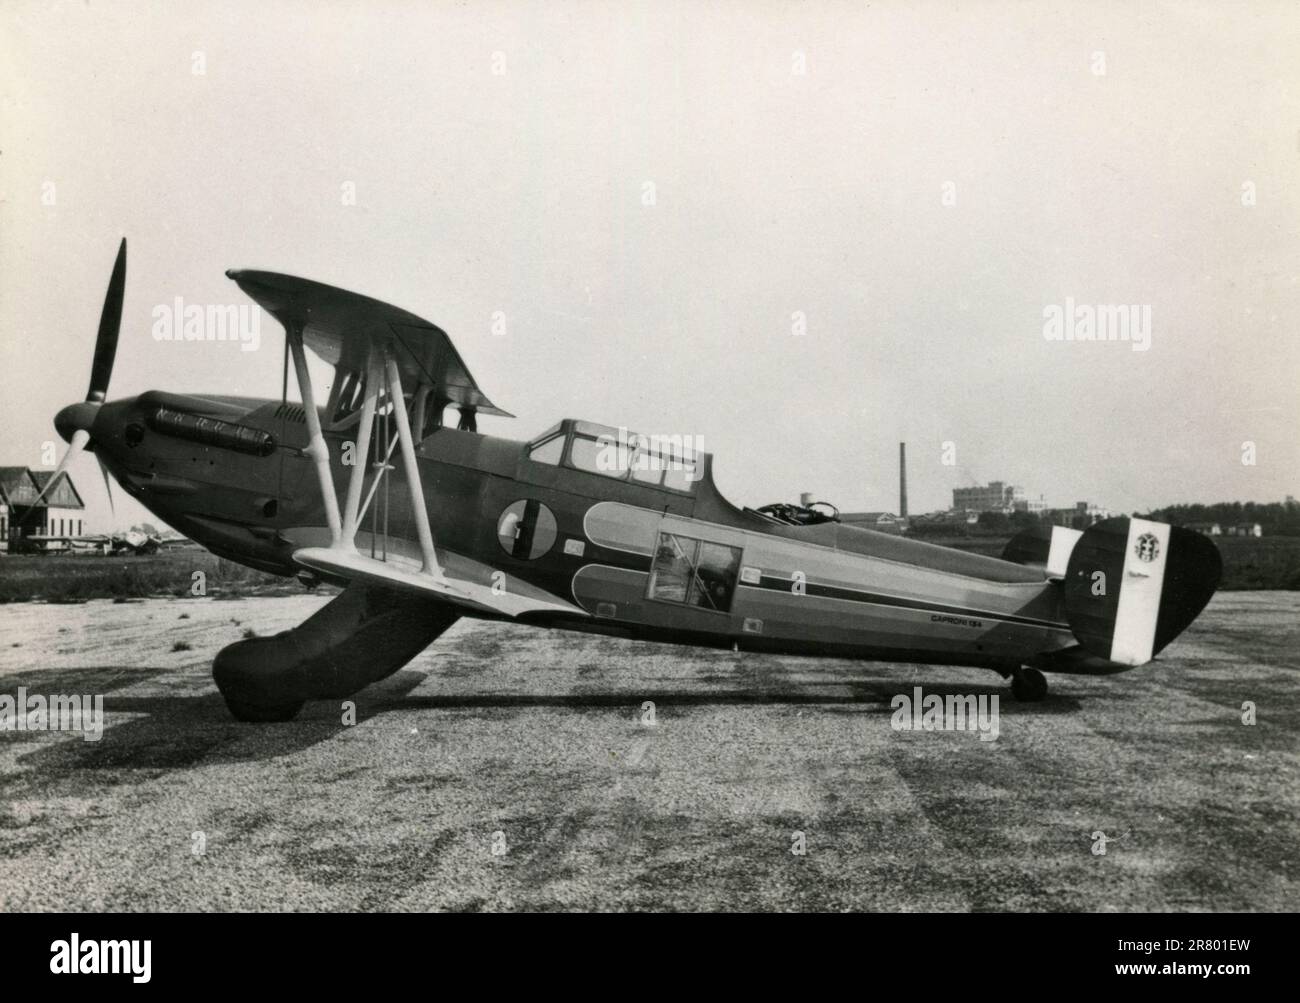 Avion italien Caproni CA.134, Italie 1930s Banque D'Images